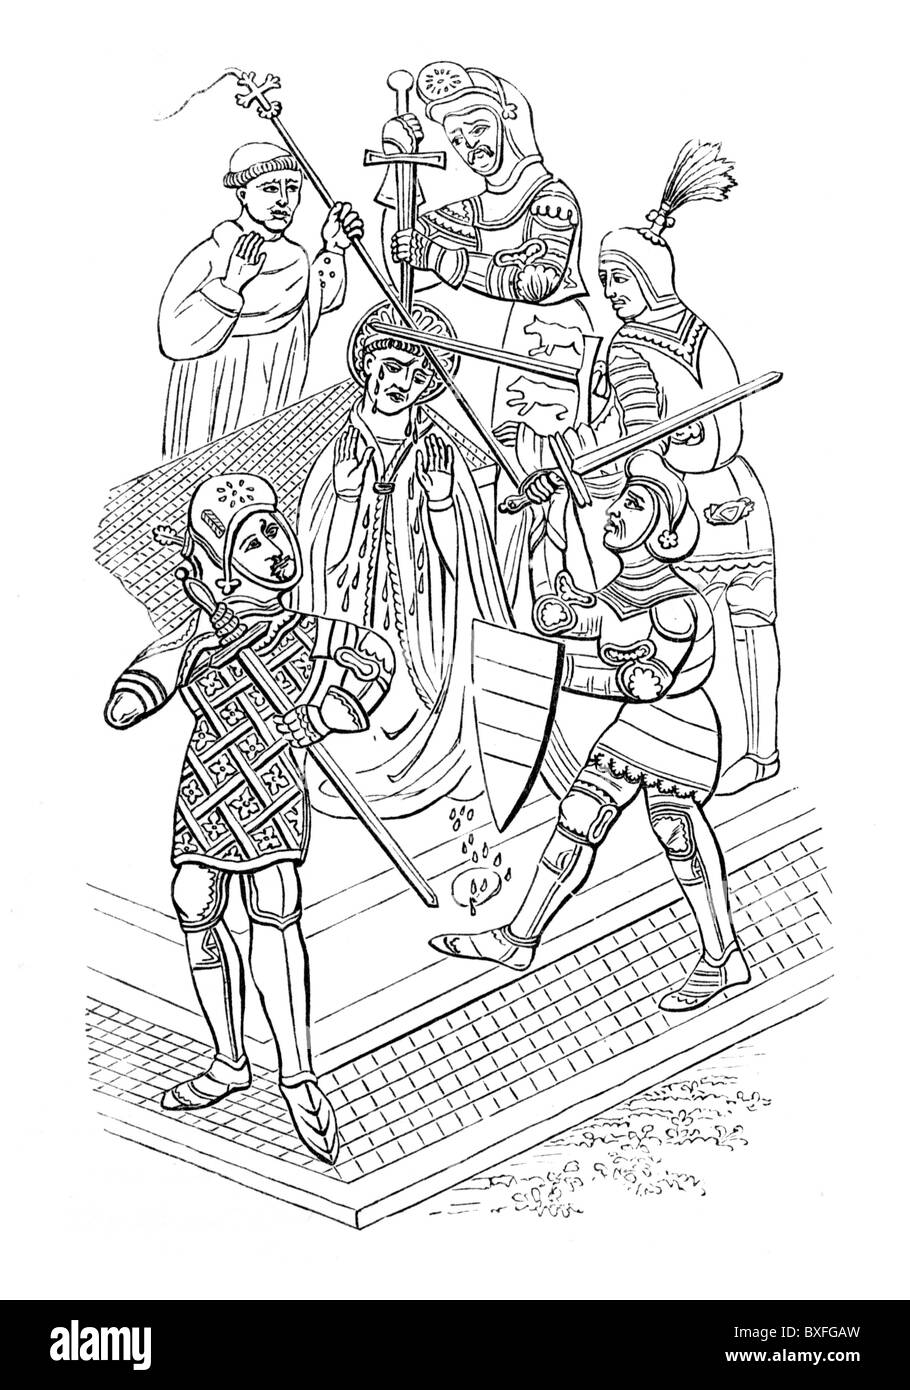 The Assassination of Thomas Becket, Archbishop of Canterbury, 1170 Stock Photo